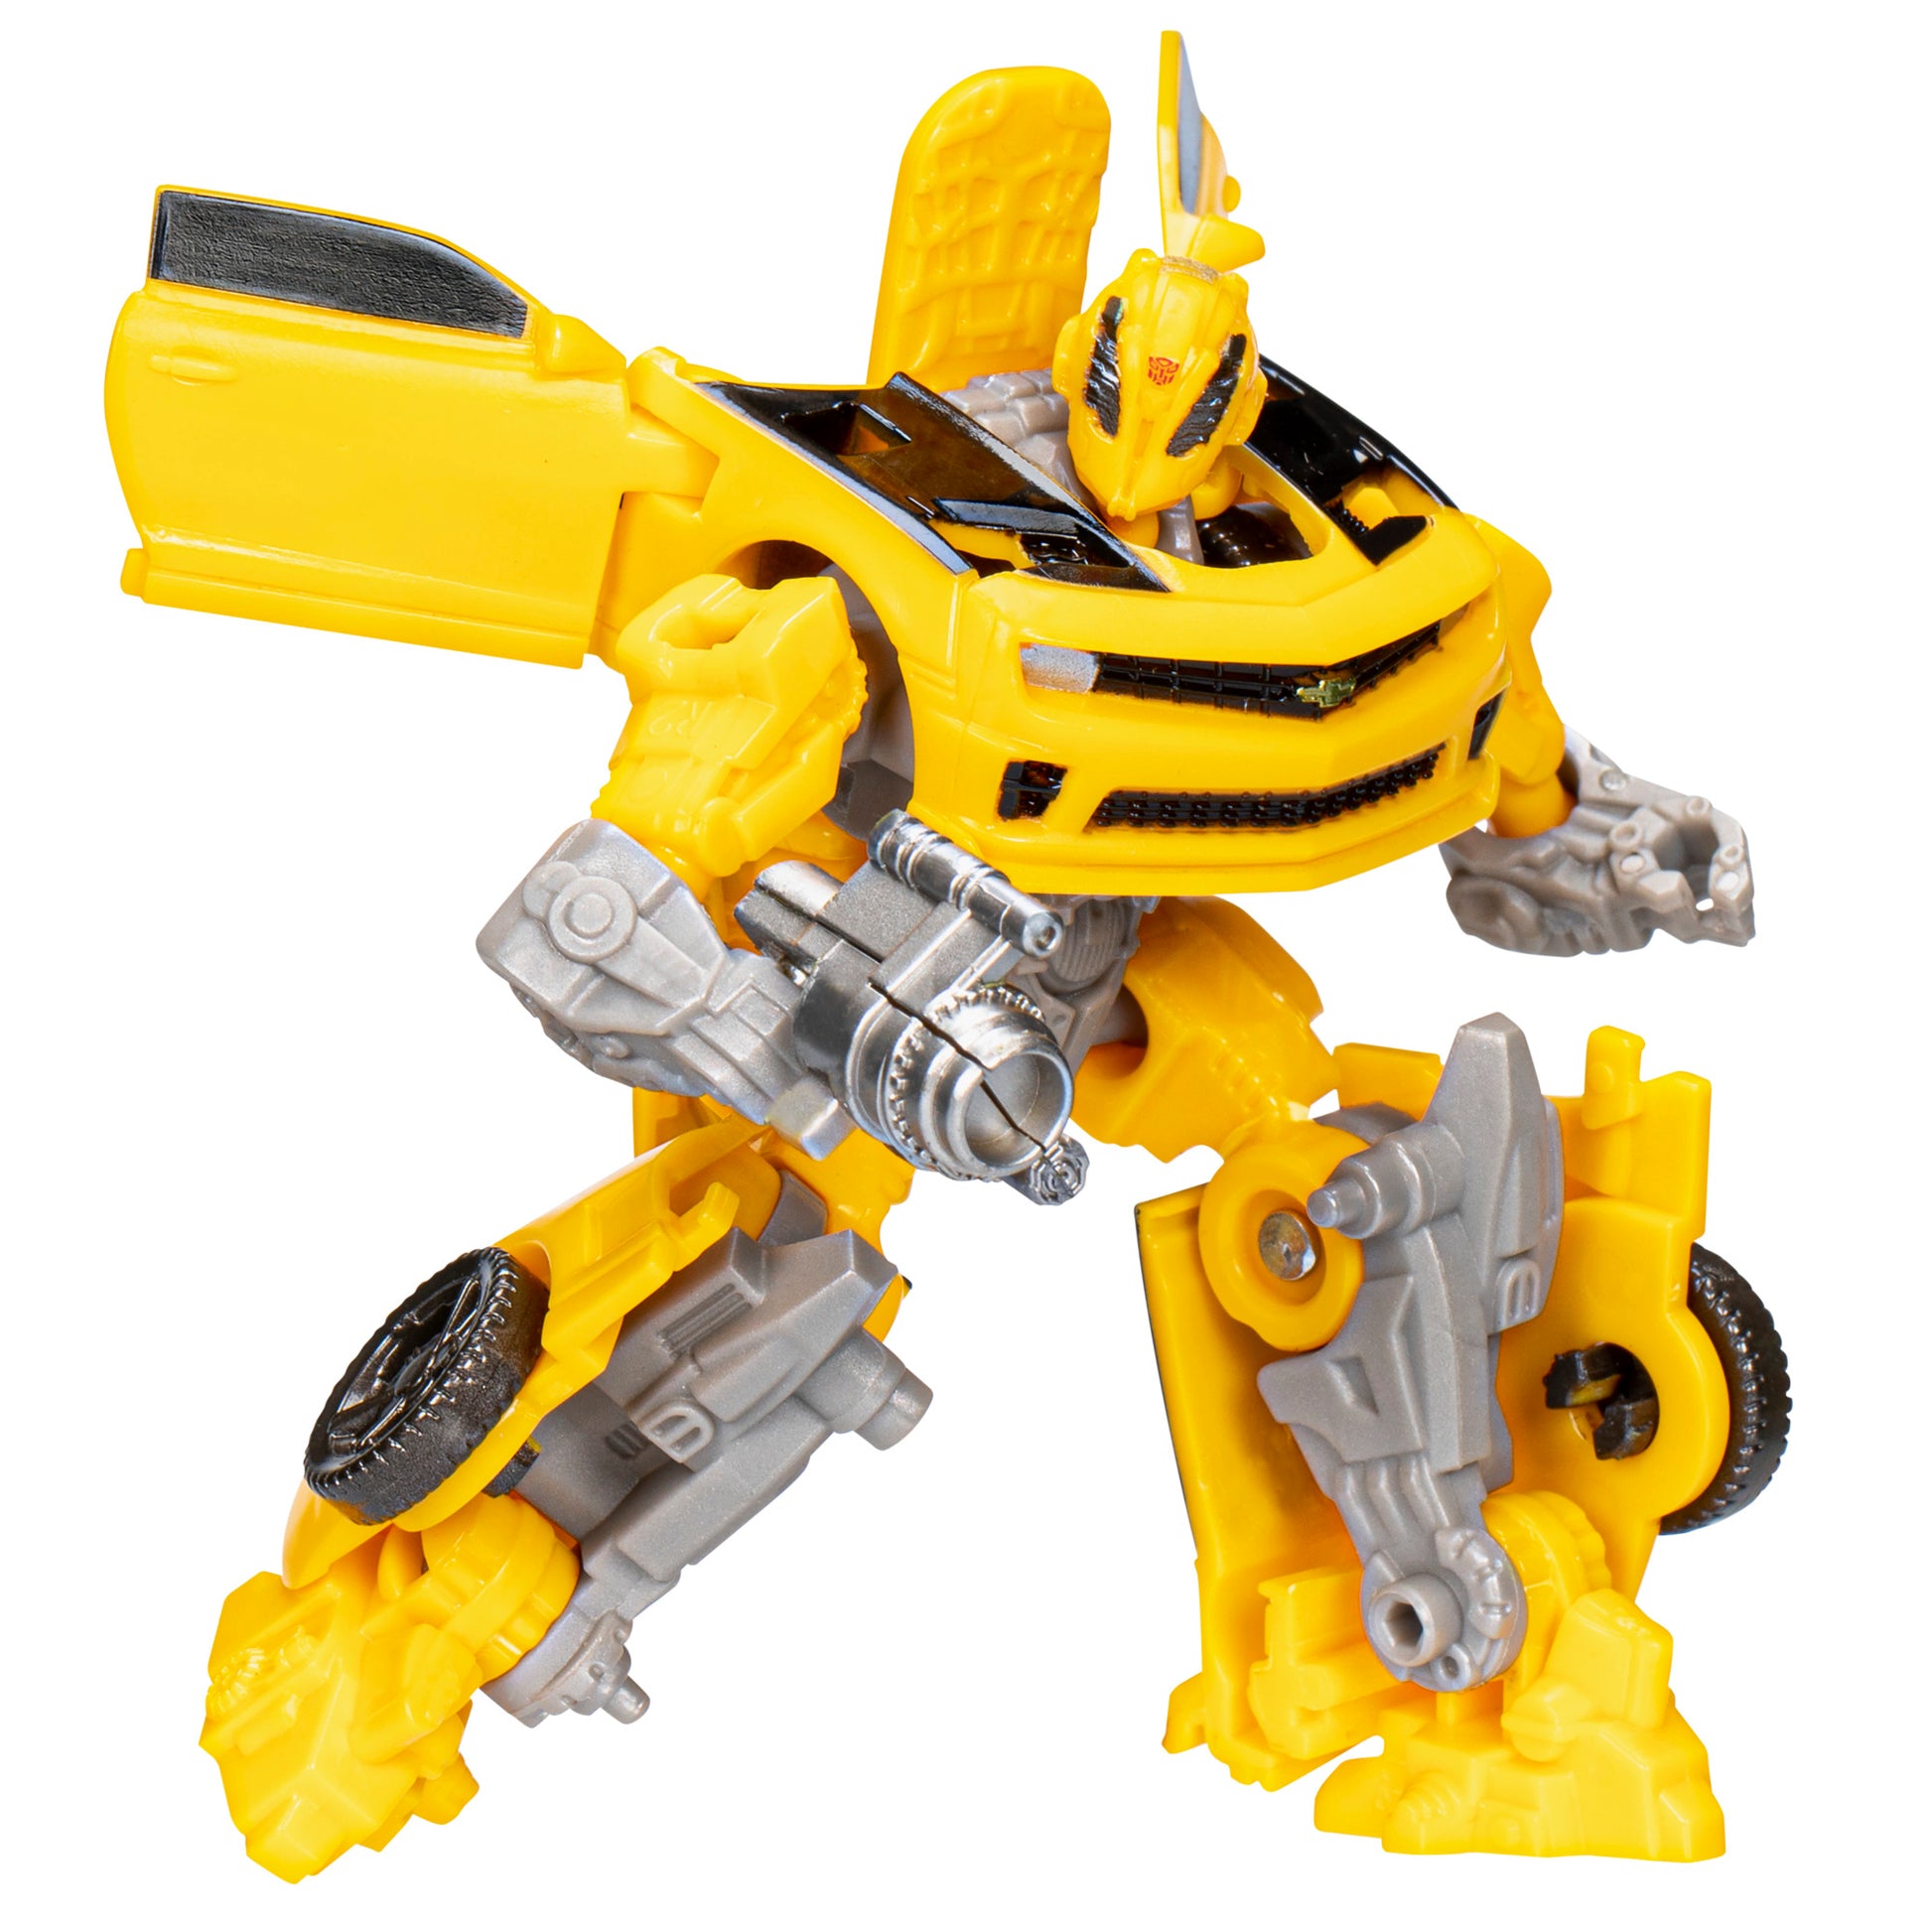 Transformers Studio Series Core Class Bumblebee Action Figure Toy - Heretoserveyou